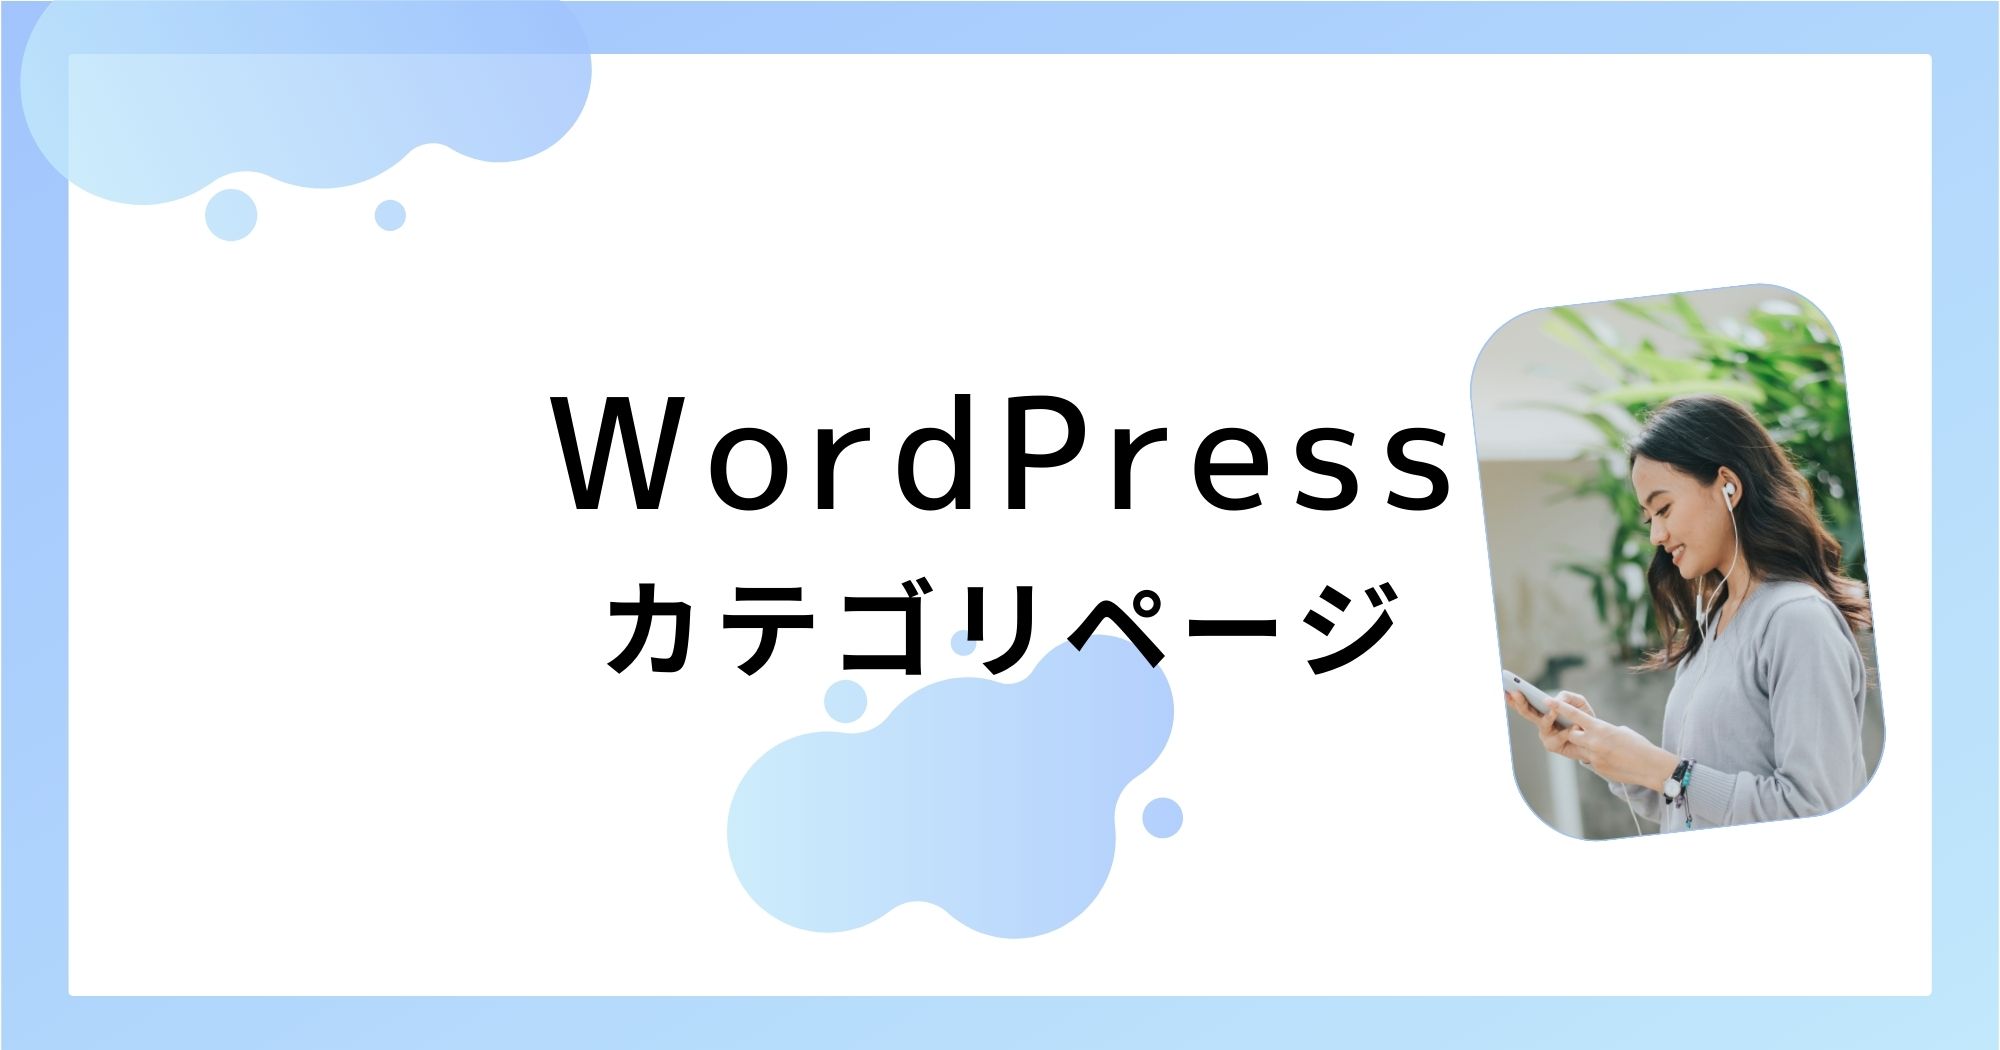 WordPressに関するカテゴリページ